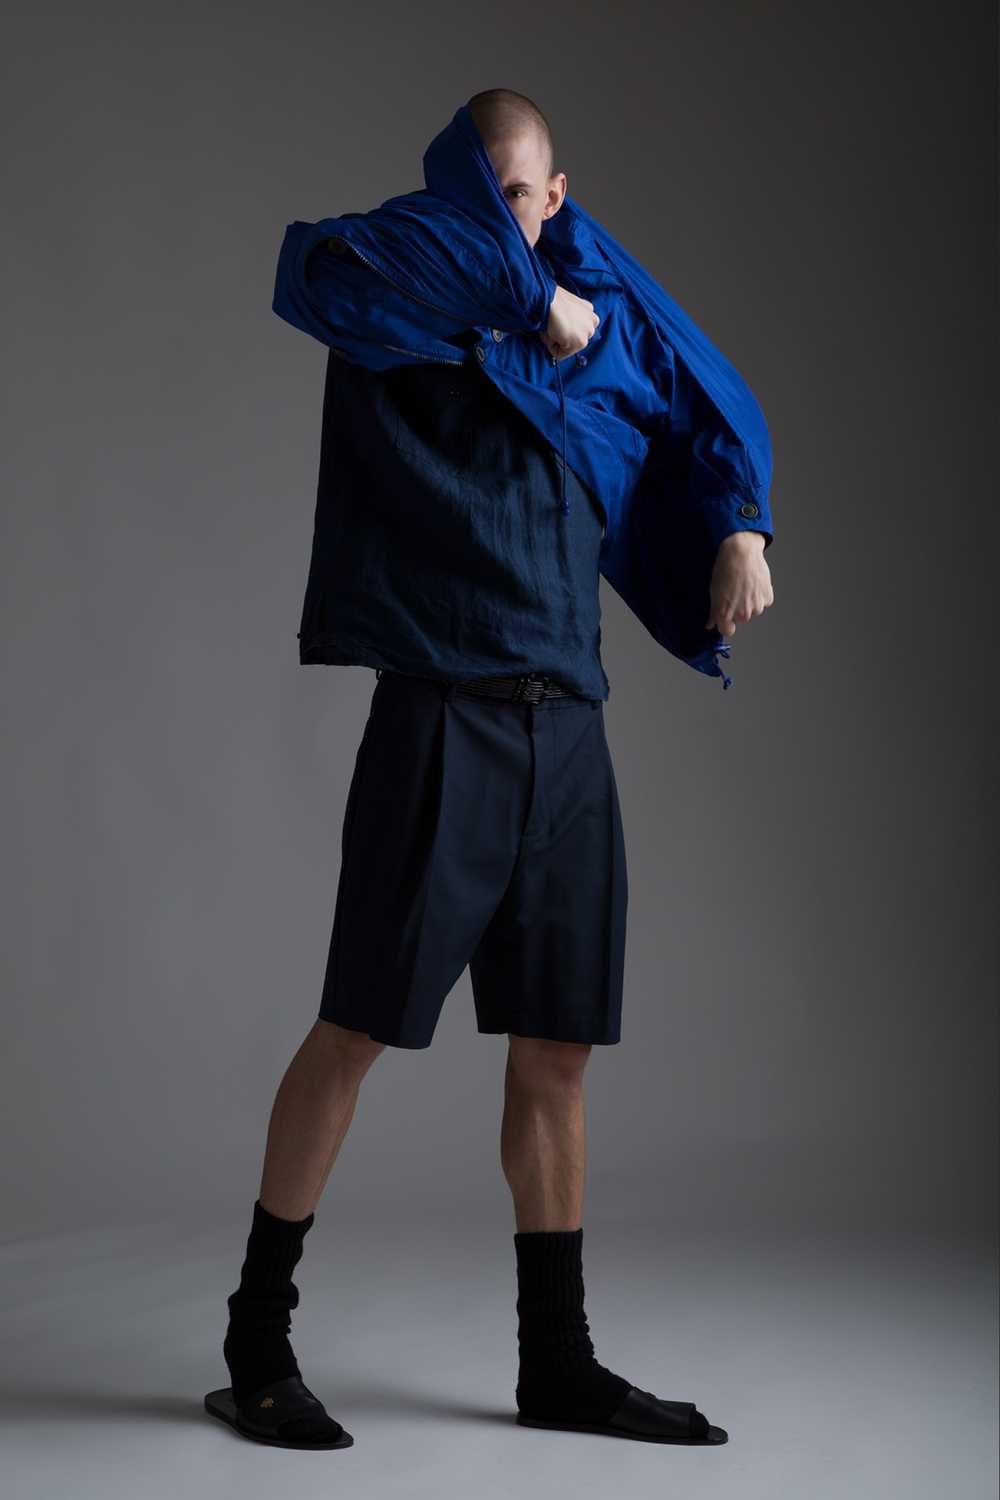 Phillip Lim Men's Shorts - image 4